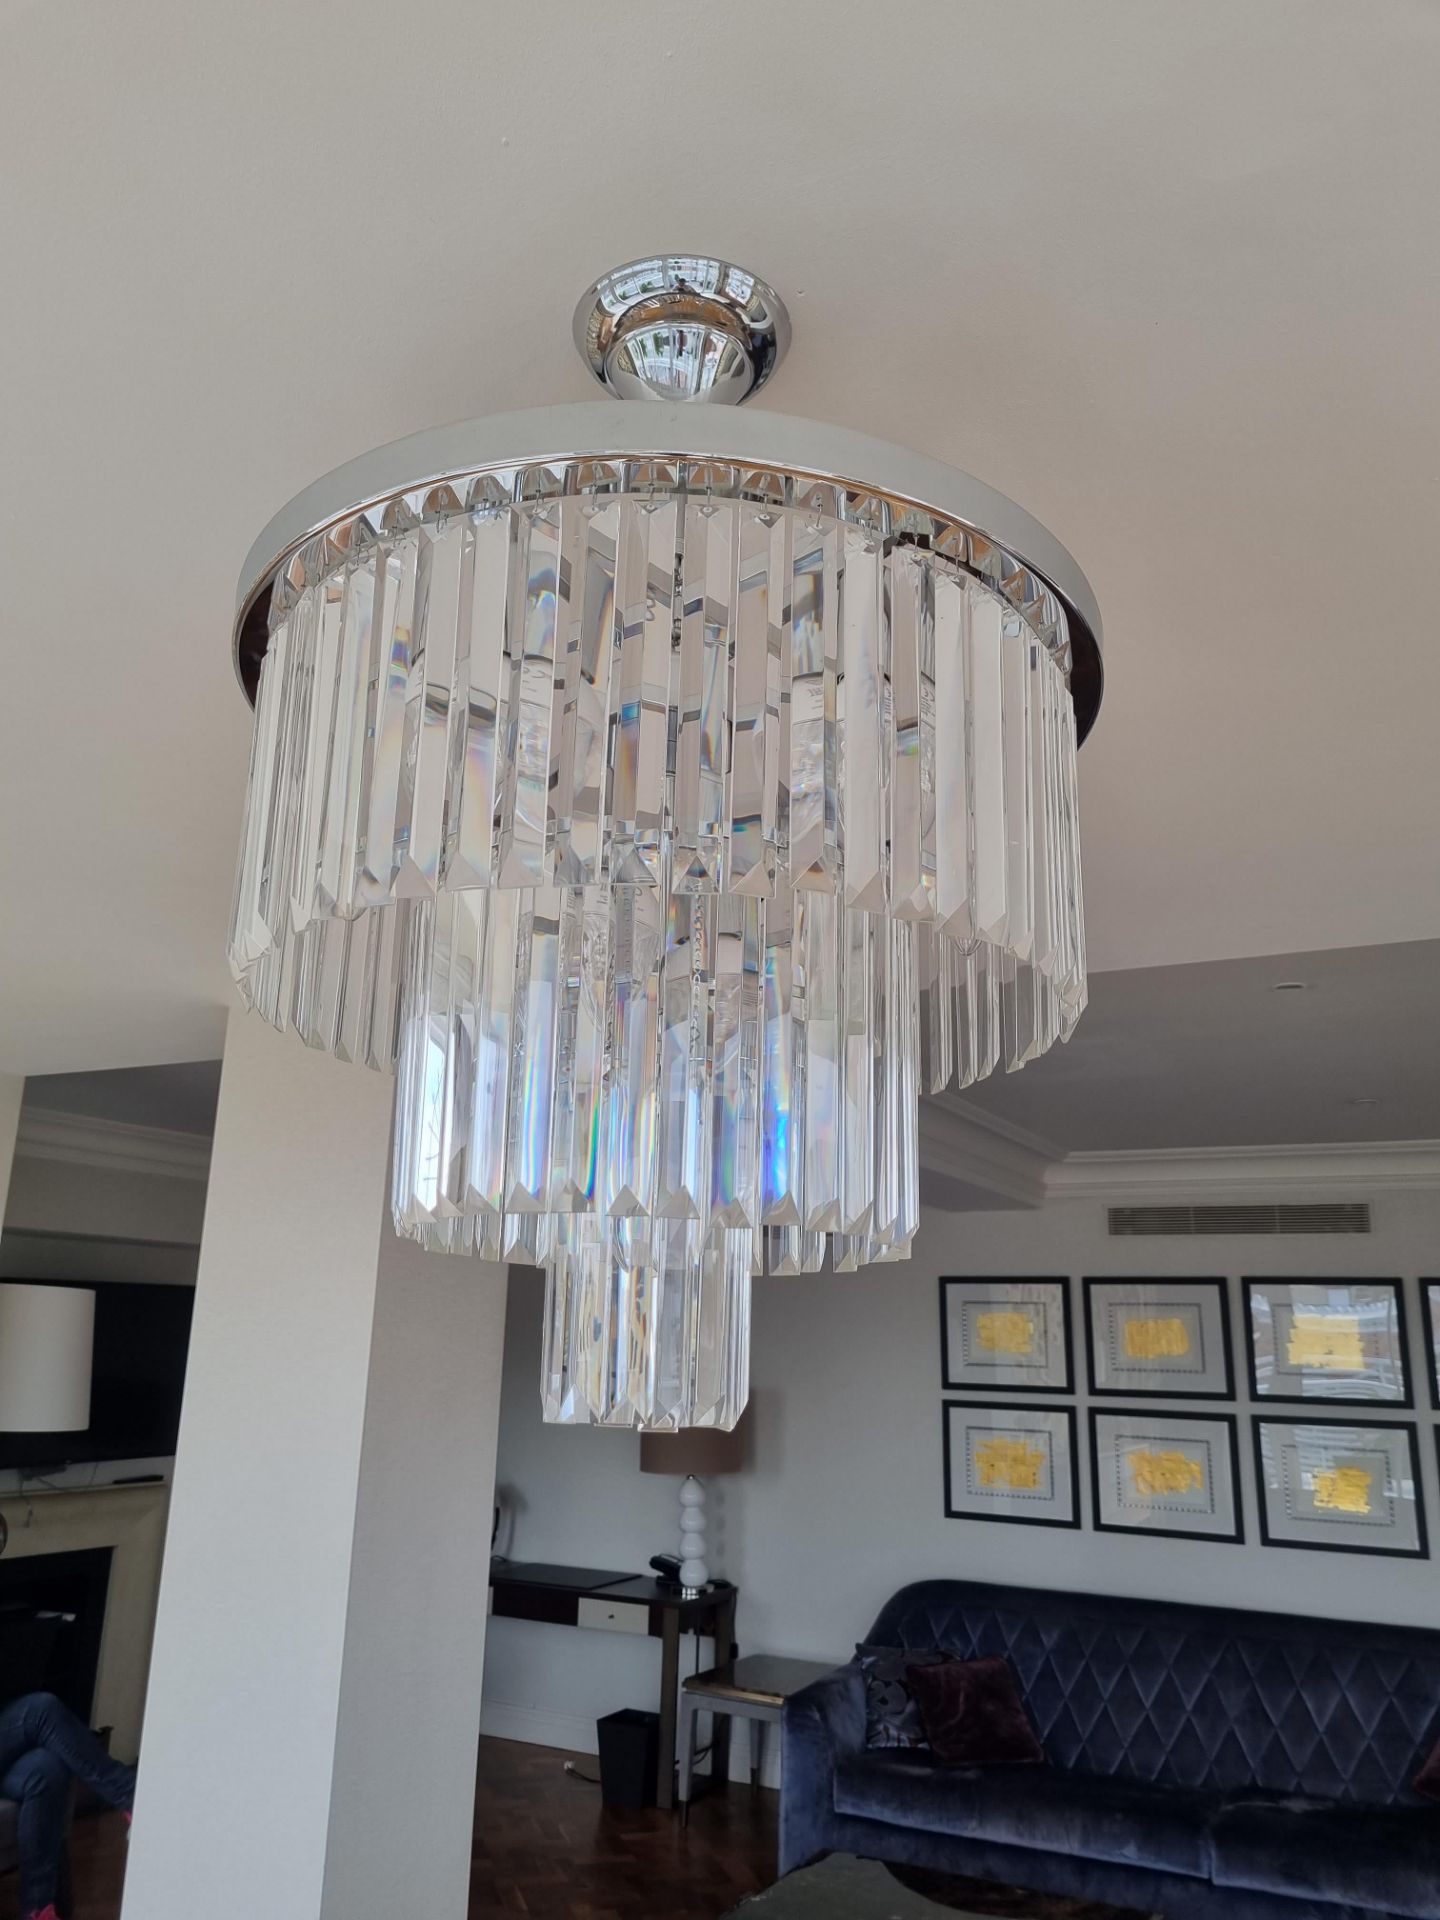 Odeon 3 tier chandelier a modern day interpretation of Venetian glass prism chandeliers from the